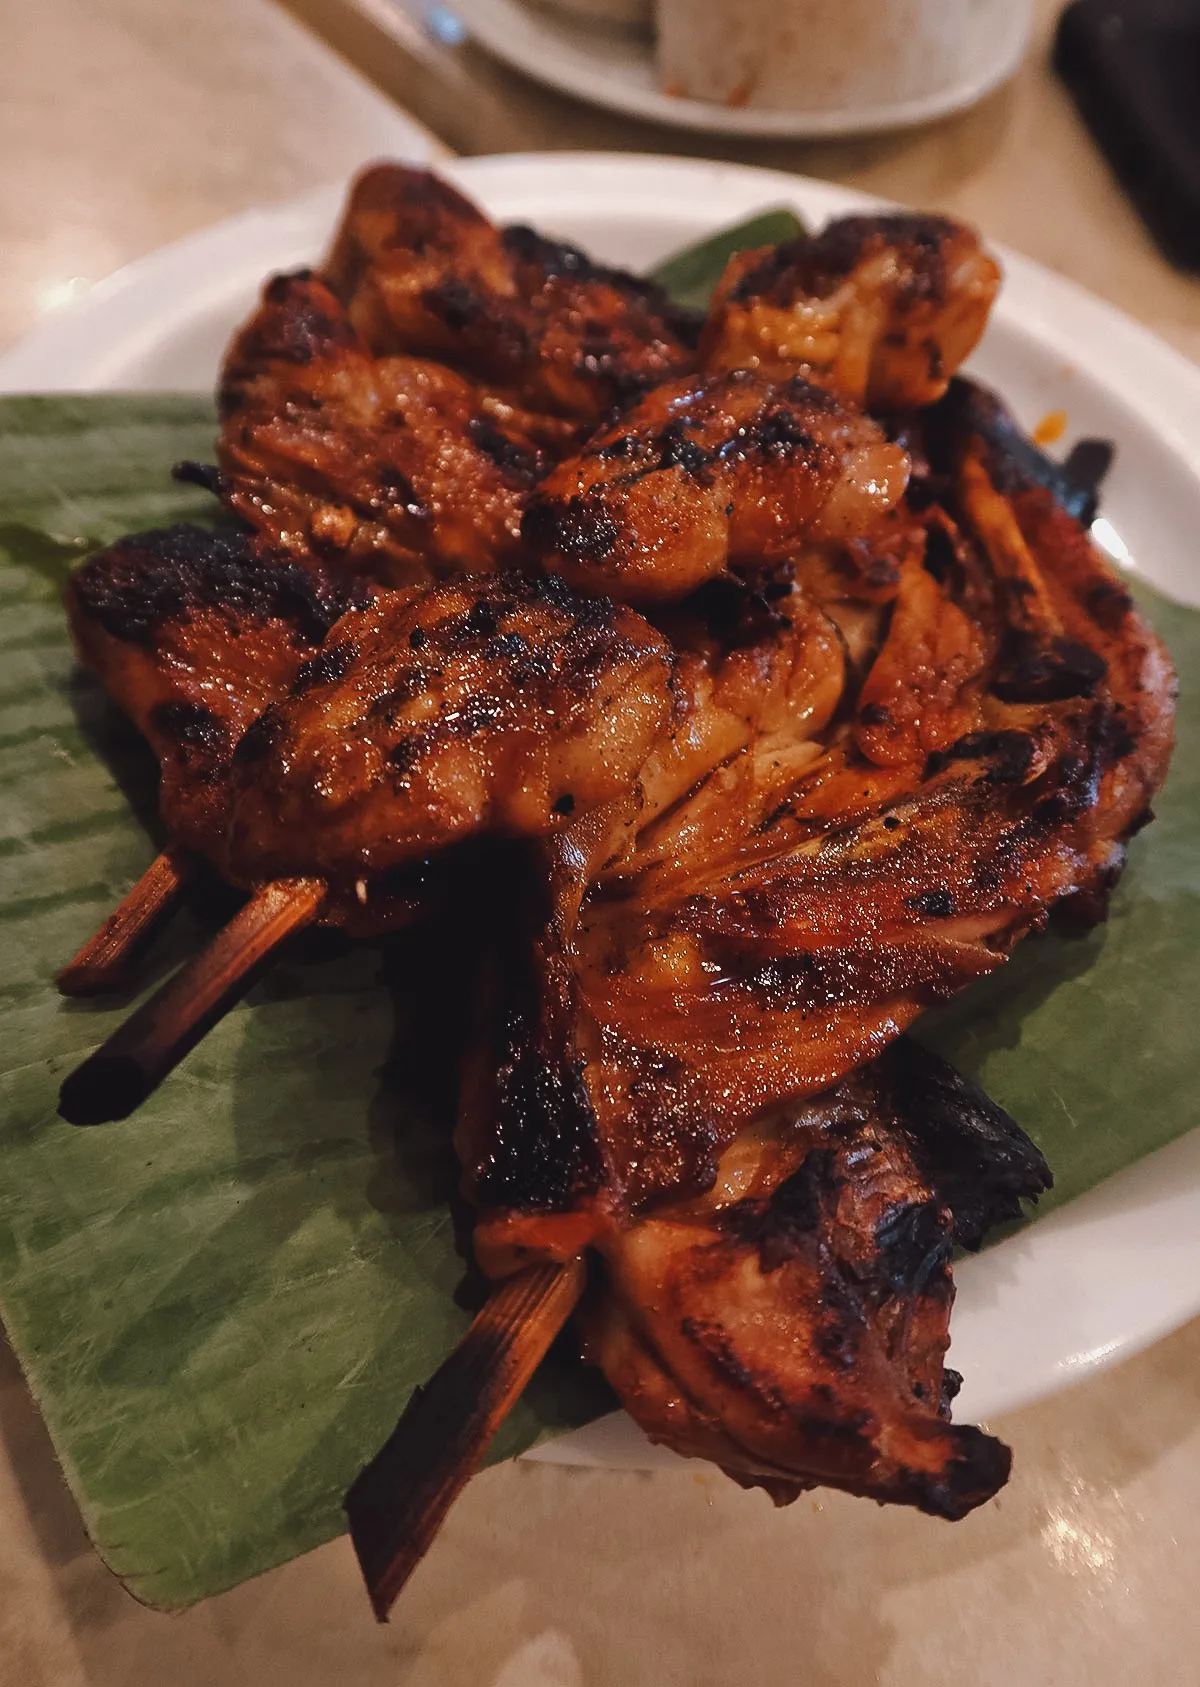 Grilled chicken at a restaurant in Metro Manila